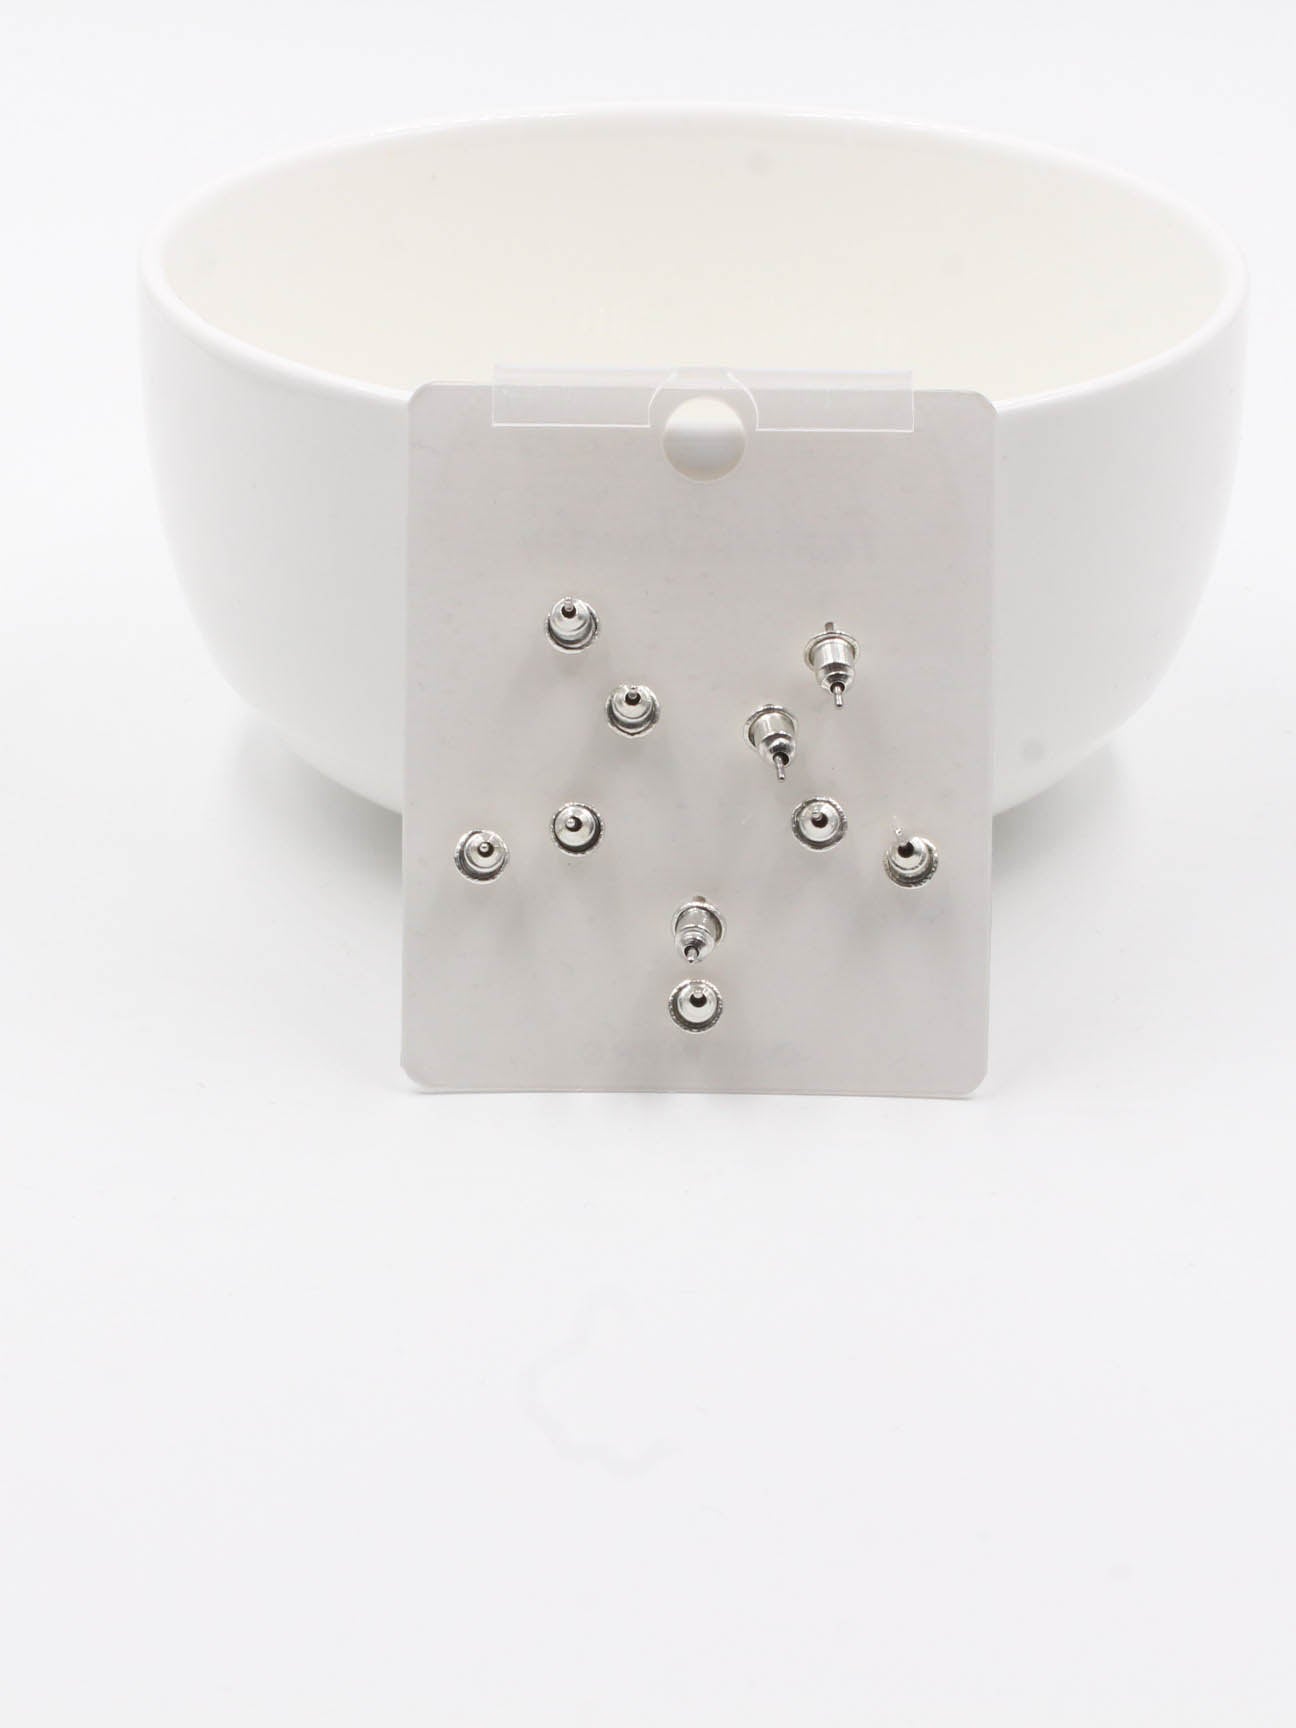 Louis Vuitton earrings collection - تشكيلة حلق لويس فيتون حلق Jewel   